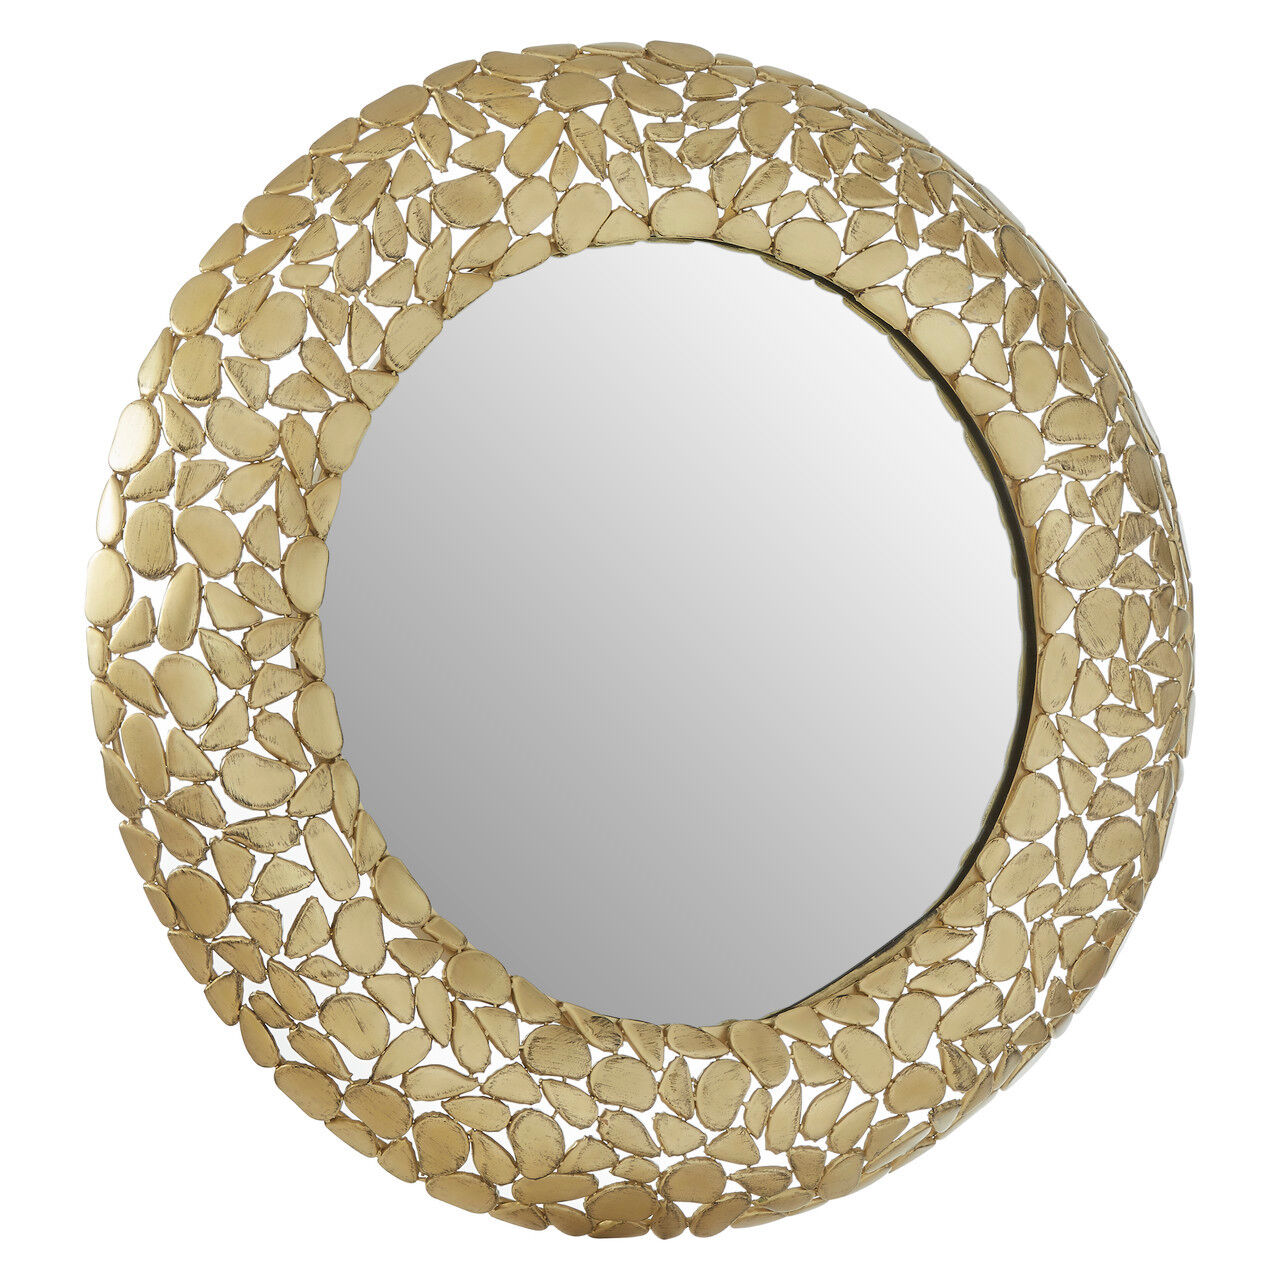 Sidari Wall Mirror   Brass